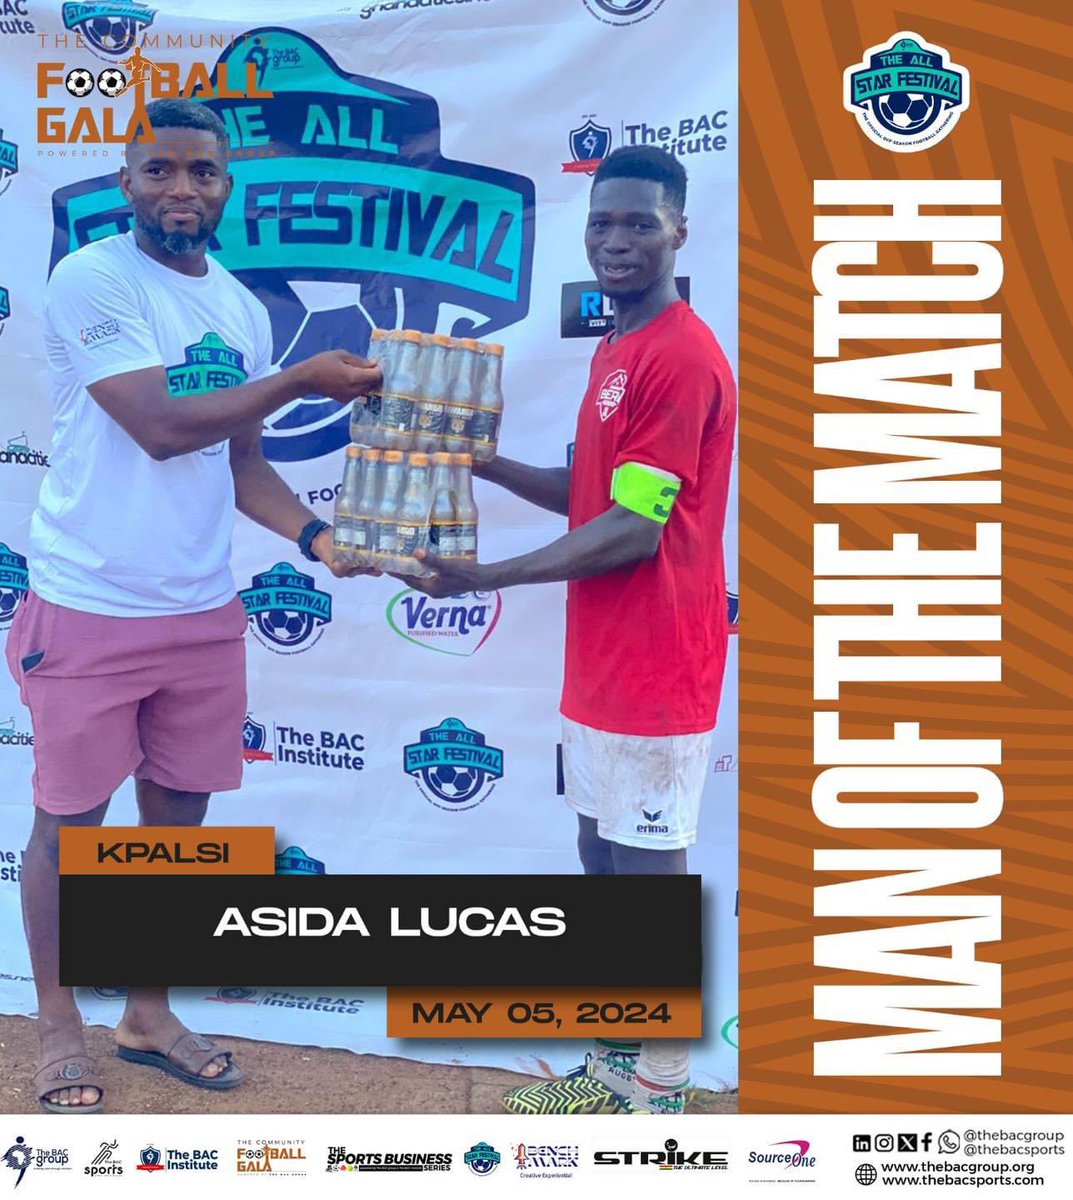 All Star Festival Community Football Gala

Asida Lucas won the Man of the Match in his side Kpalsi 0-0 draw against Sakasaka 

#allstarfestival2024